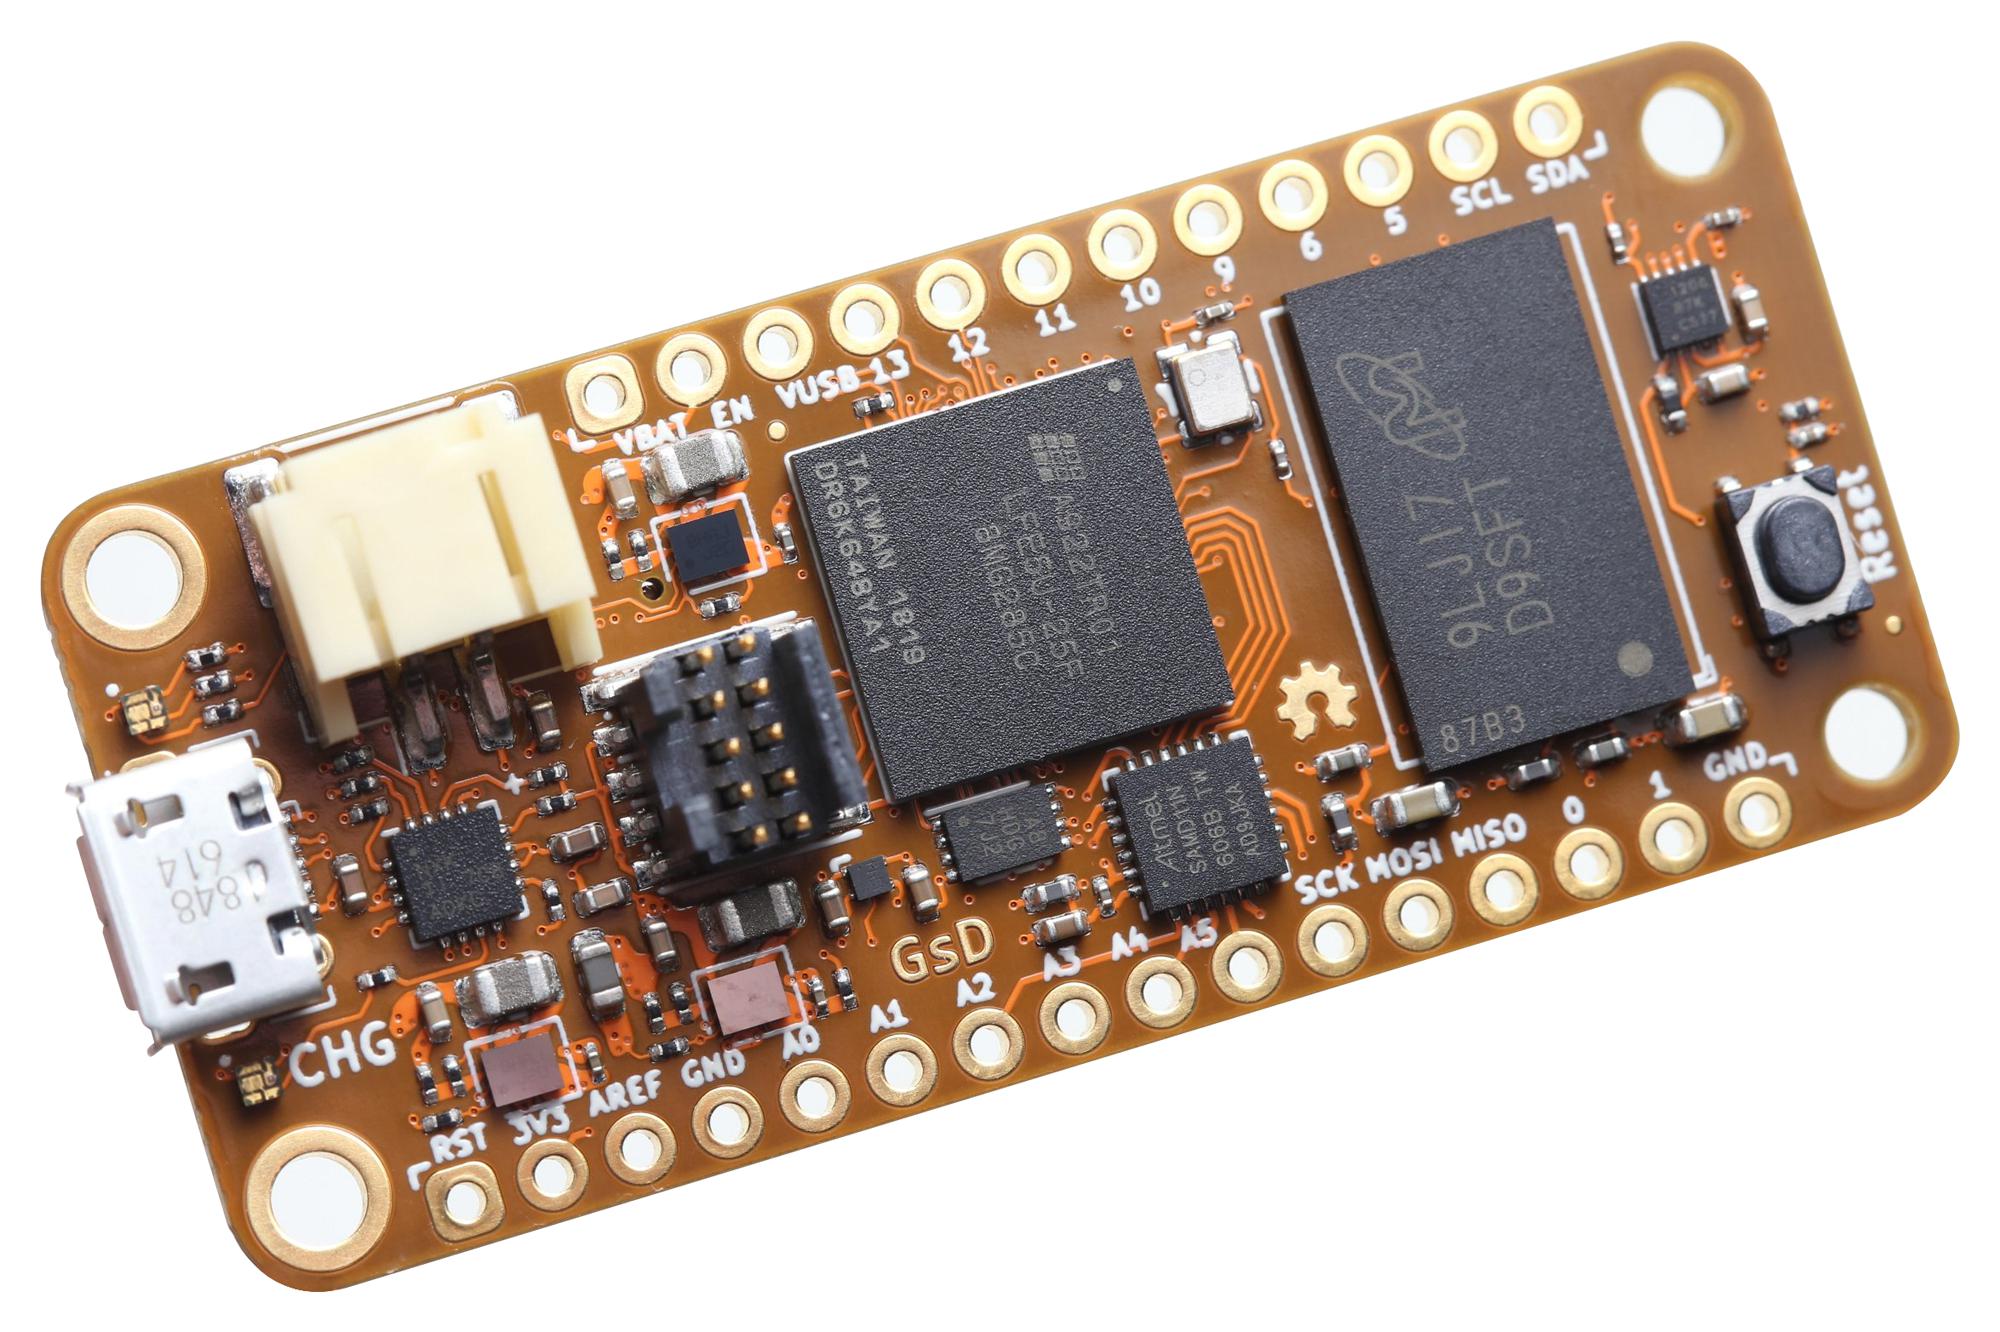 Compact development board encourages FPGA experimentation